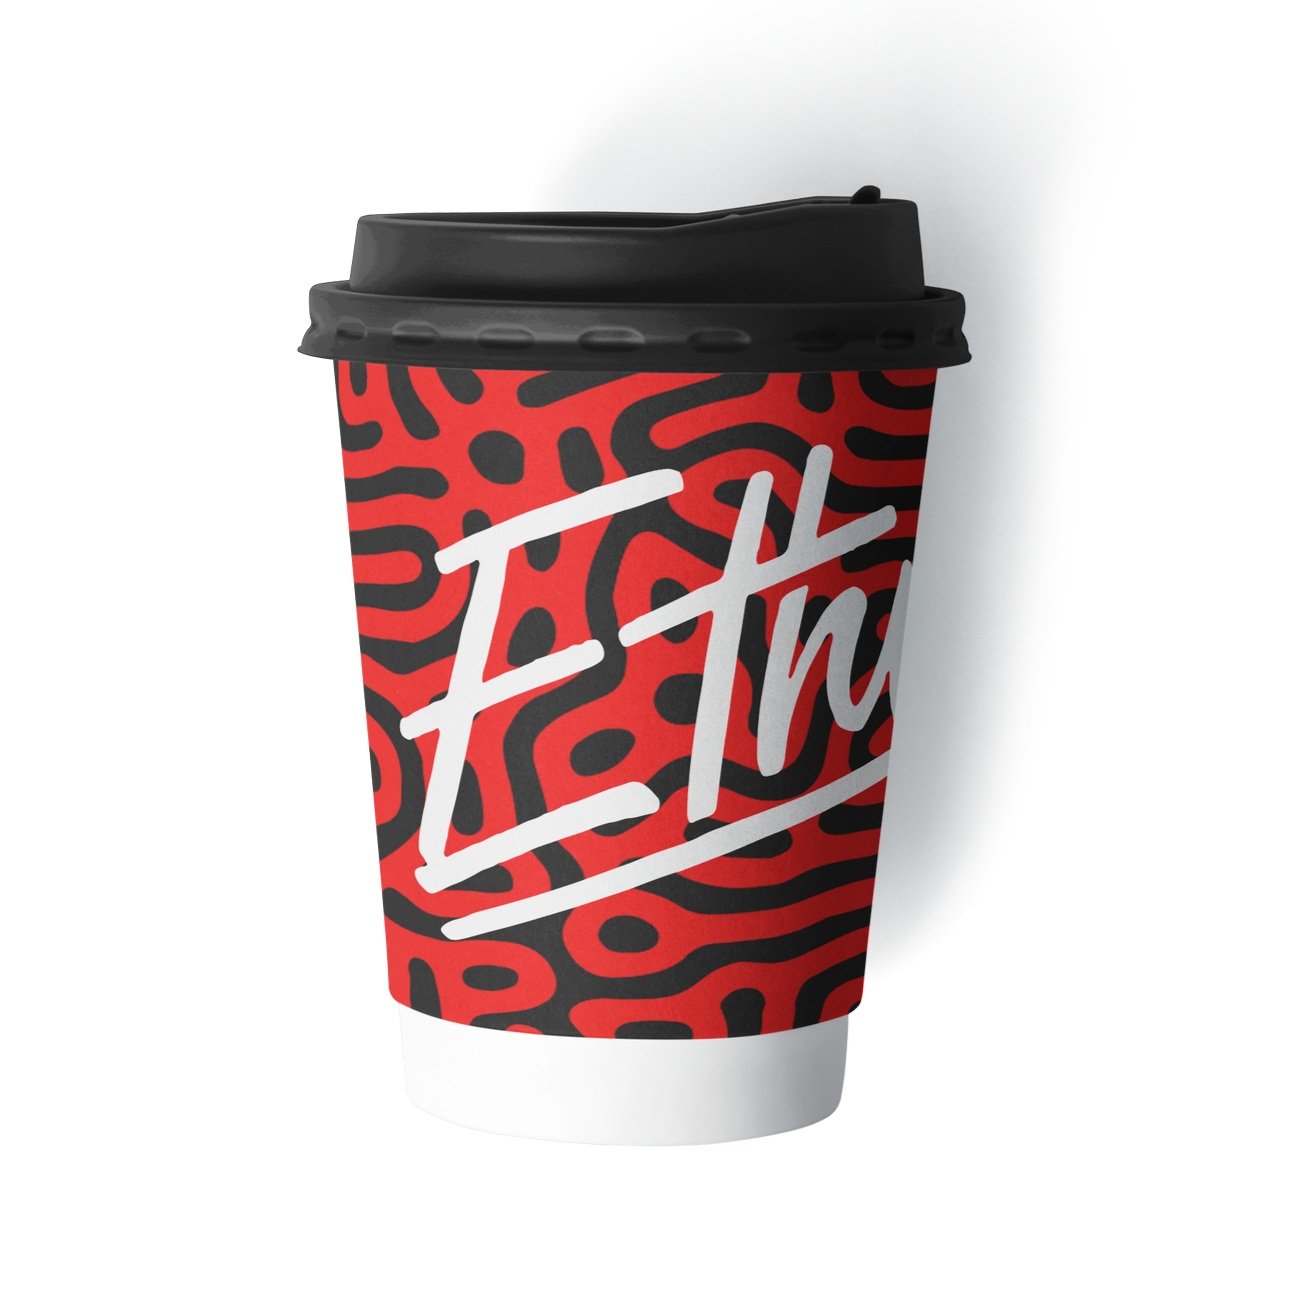 coffee-cup-mockup-03.jpg